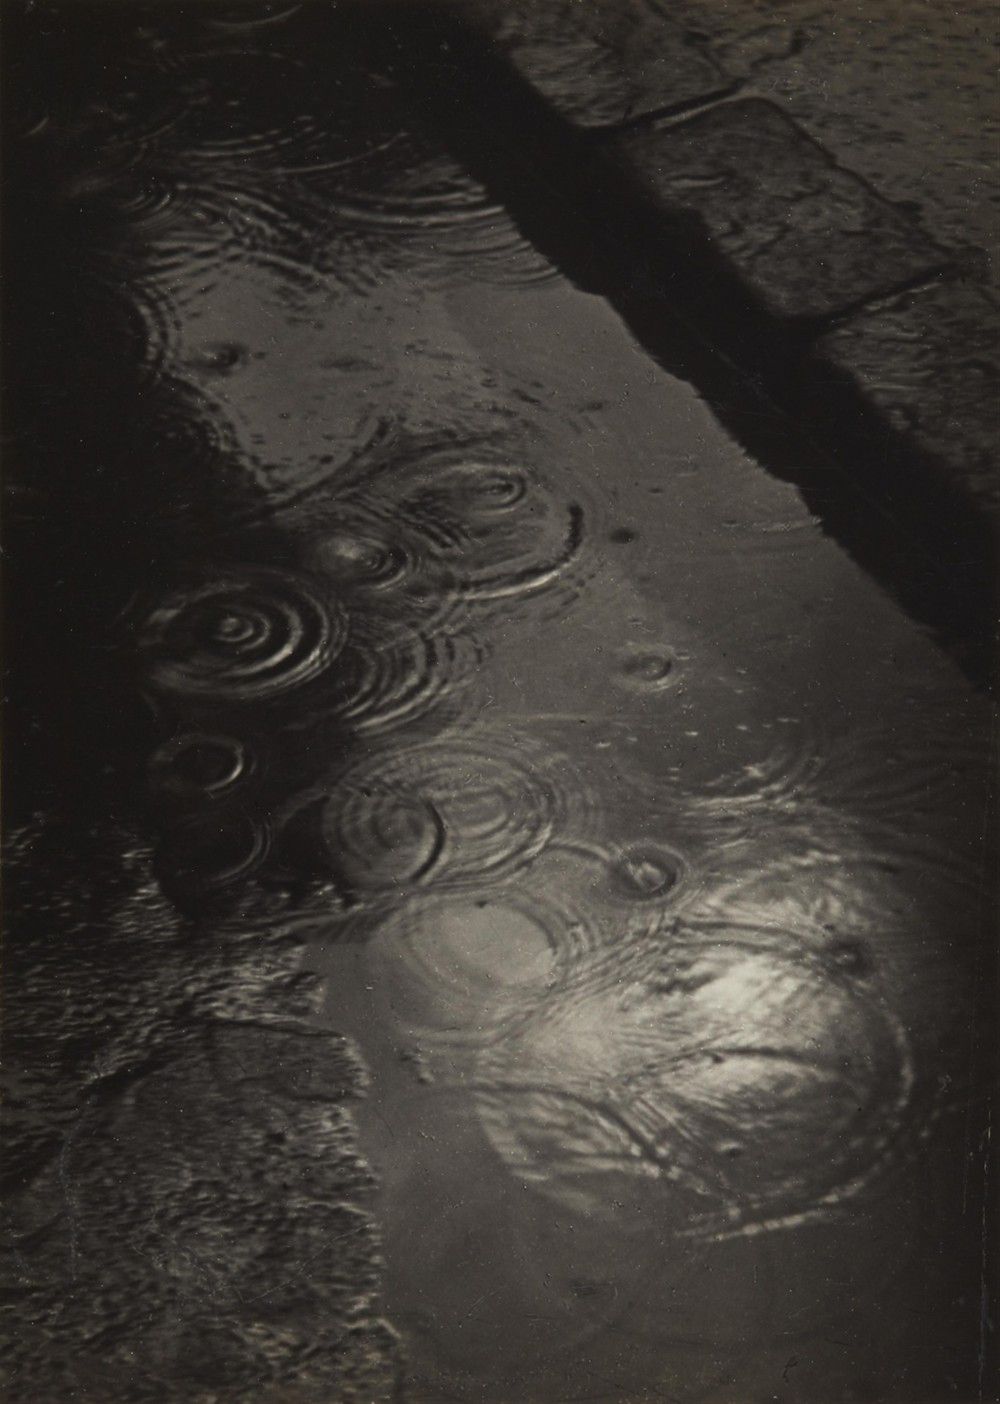 imre kinszki, esőcseppek, budapest, gelatin silver print, 1934; (15.6 cm x 17.4 cm) private collection